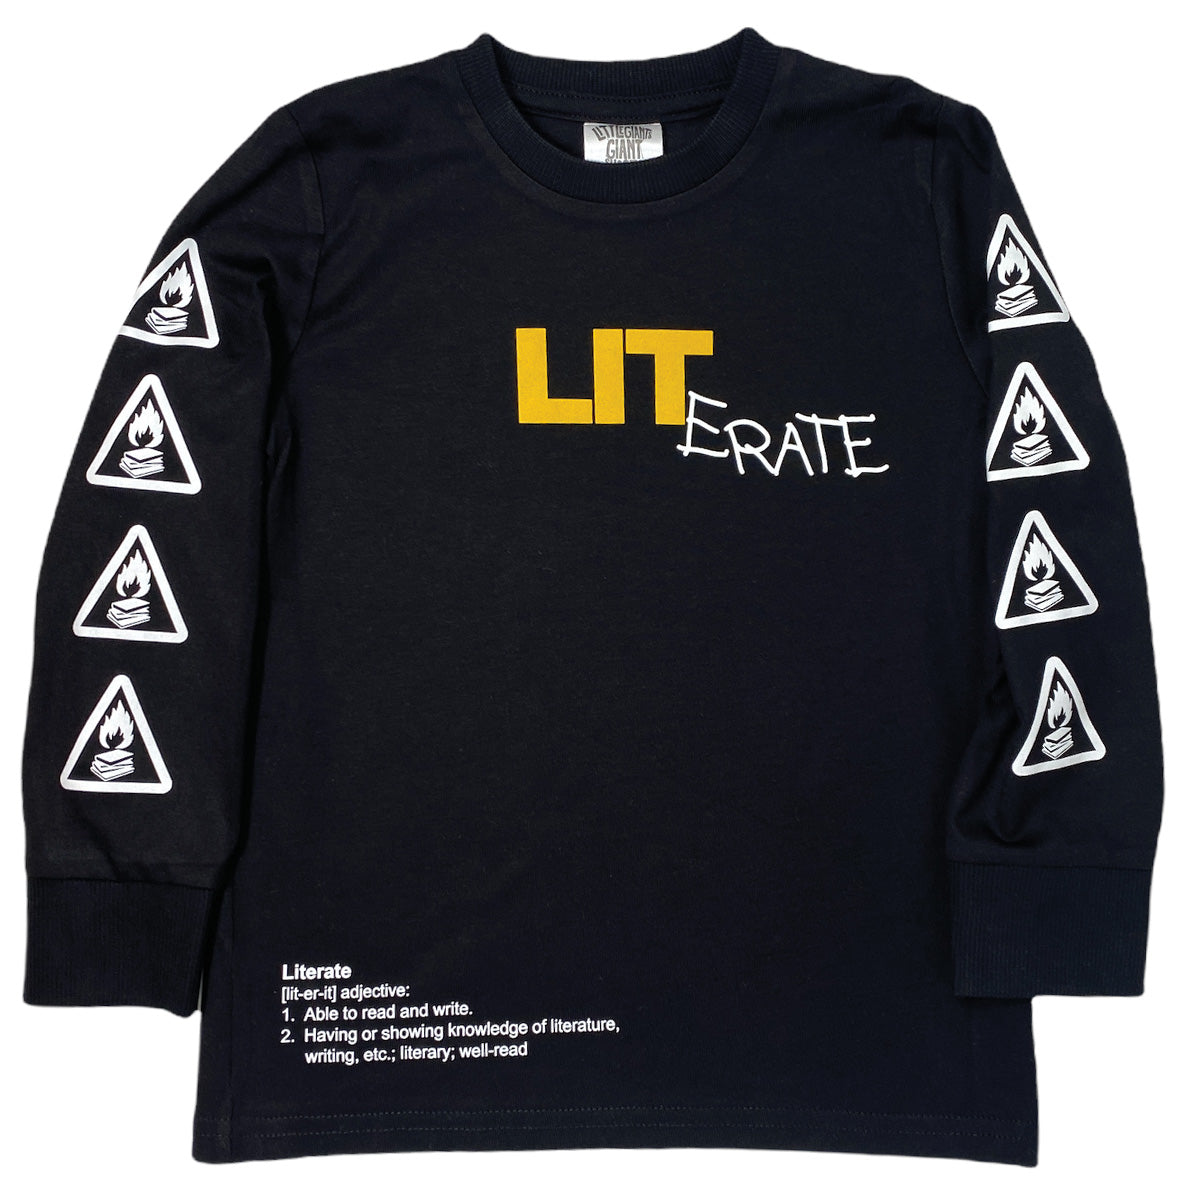 LITerate Long T-Shirt (Black)